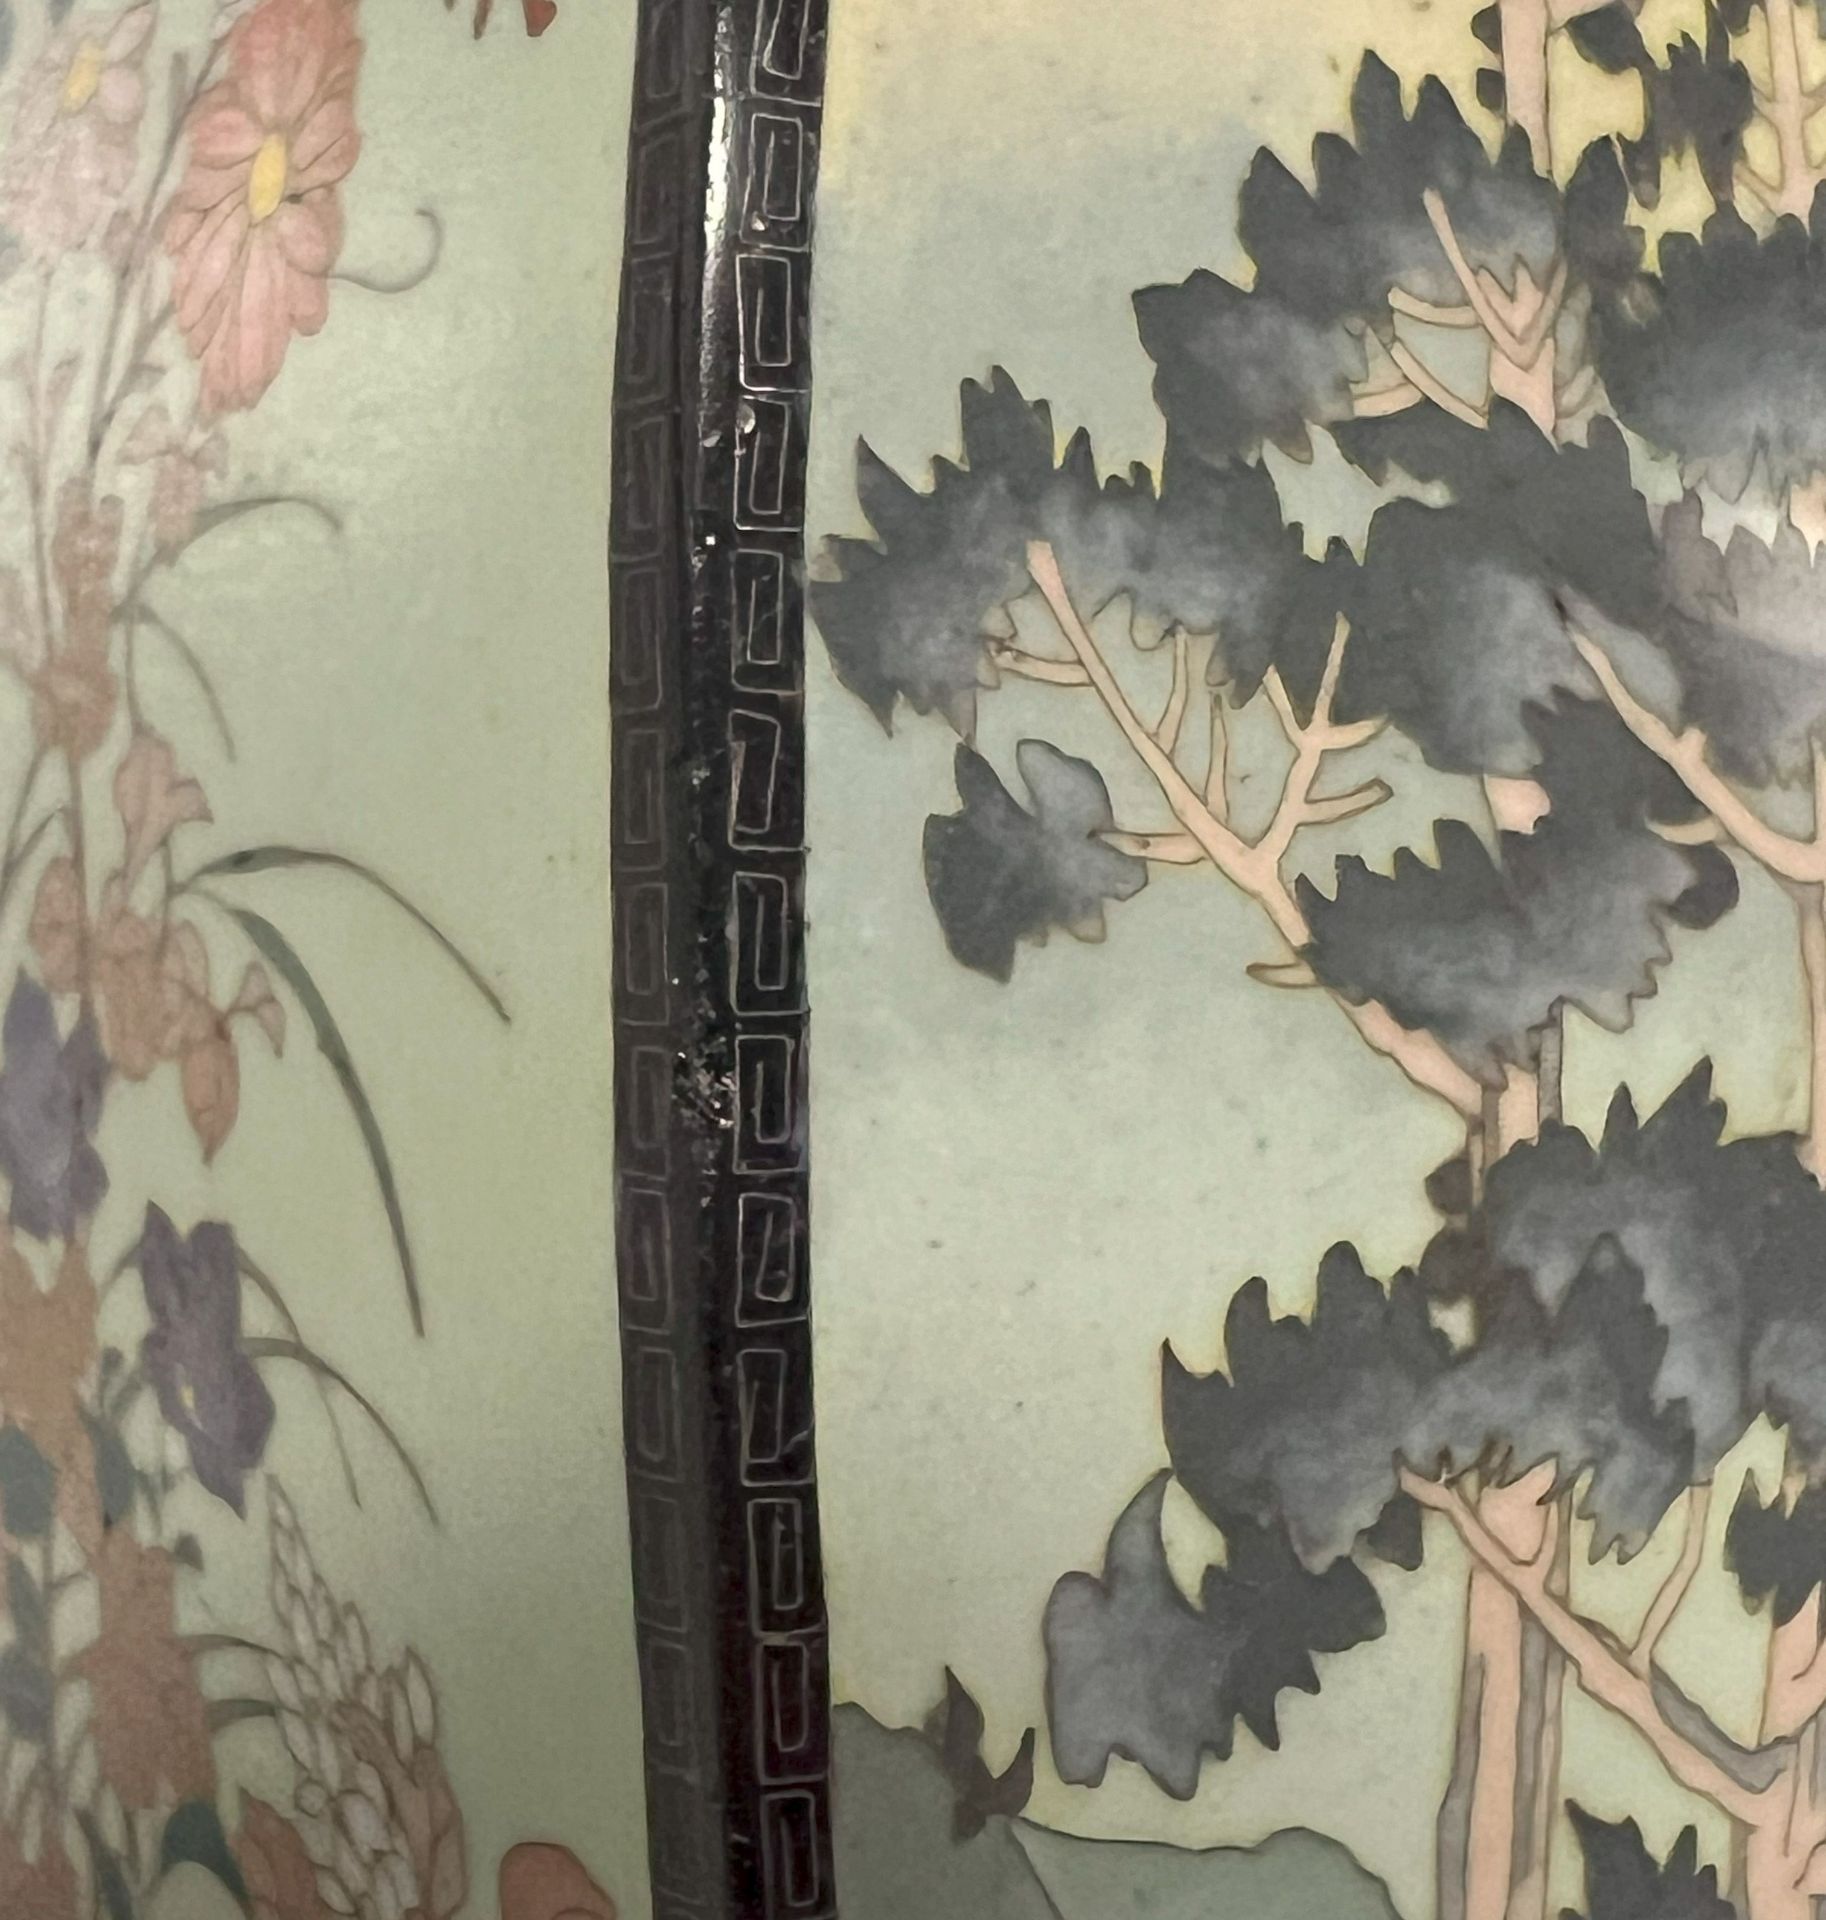 Asien, frühe Cloisonné Vase mit feinen Landschafts- und Vogelmotiven, interessante, kantige Form, - Image 6 of 11